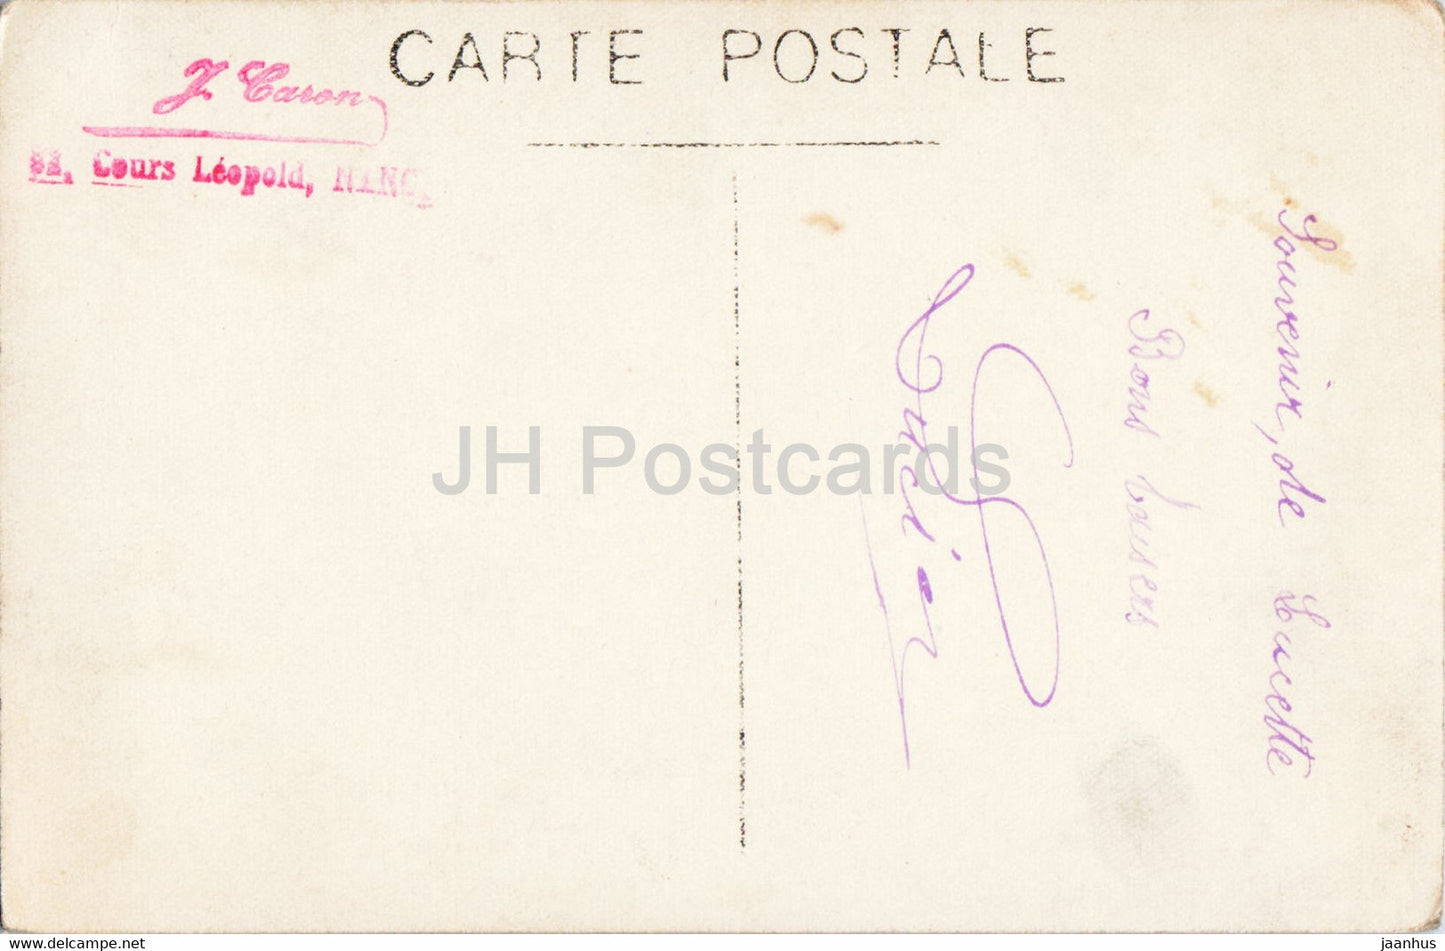 woman - 60324 - J. Caron - old postcard - France - used